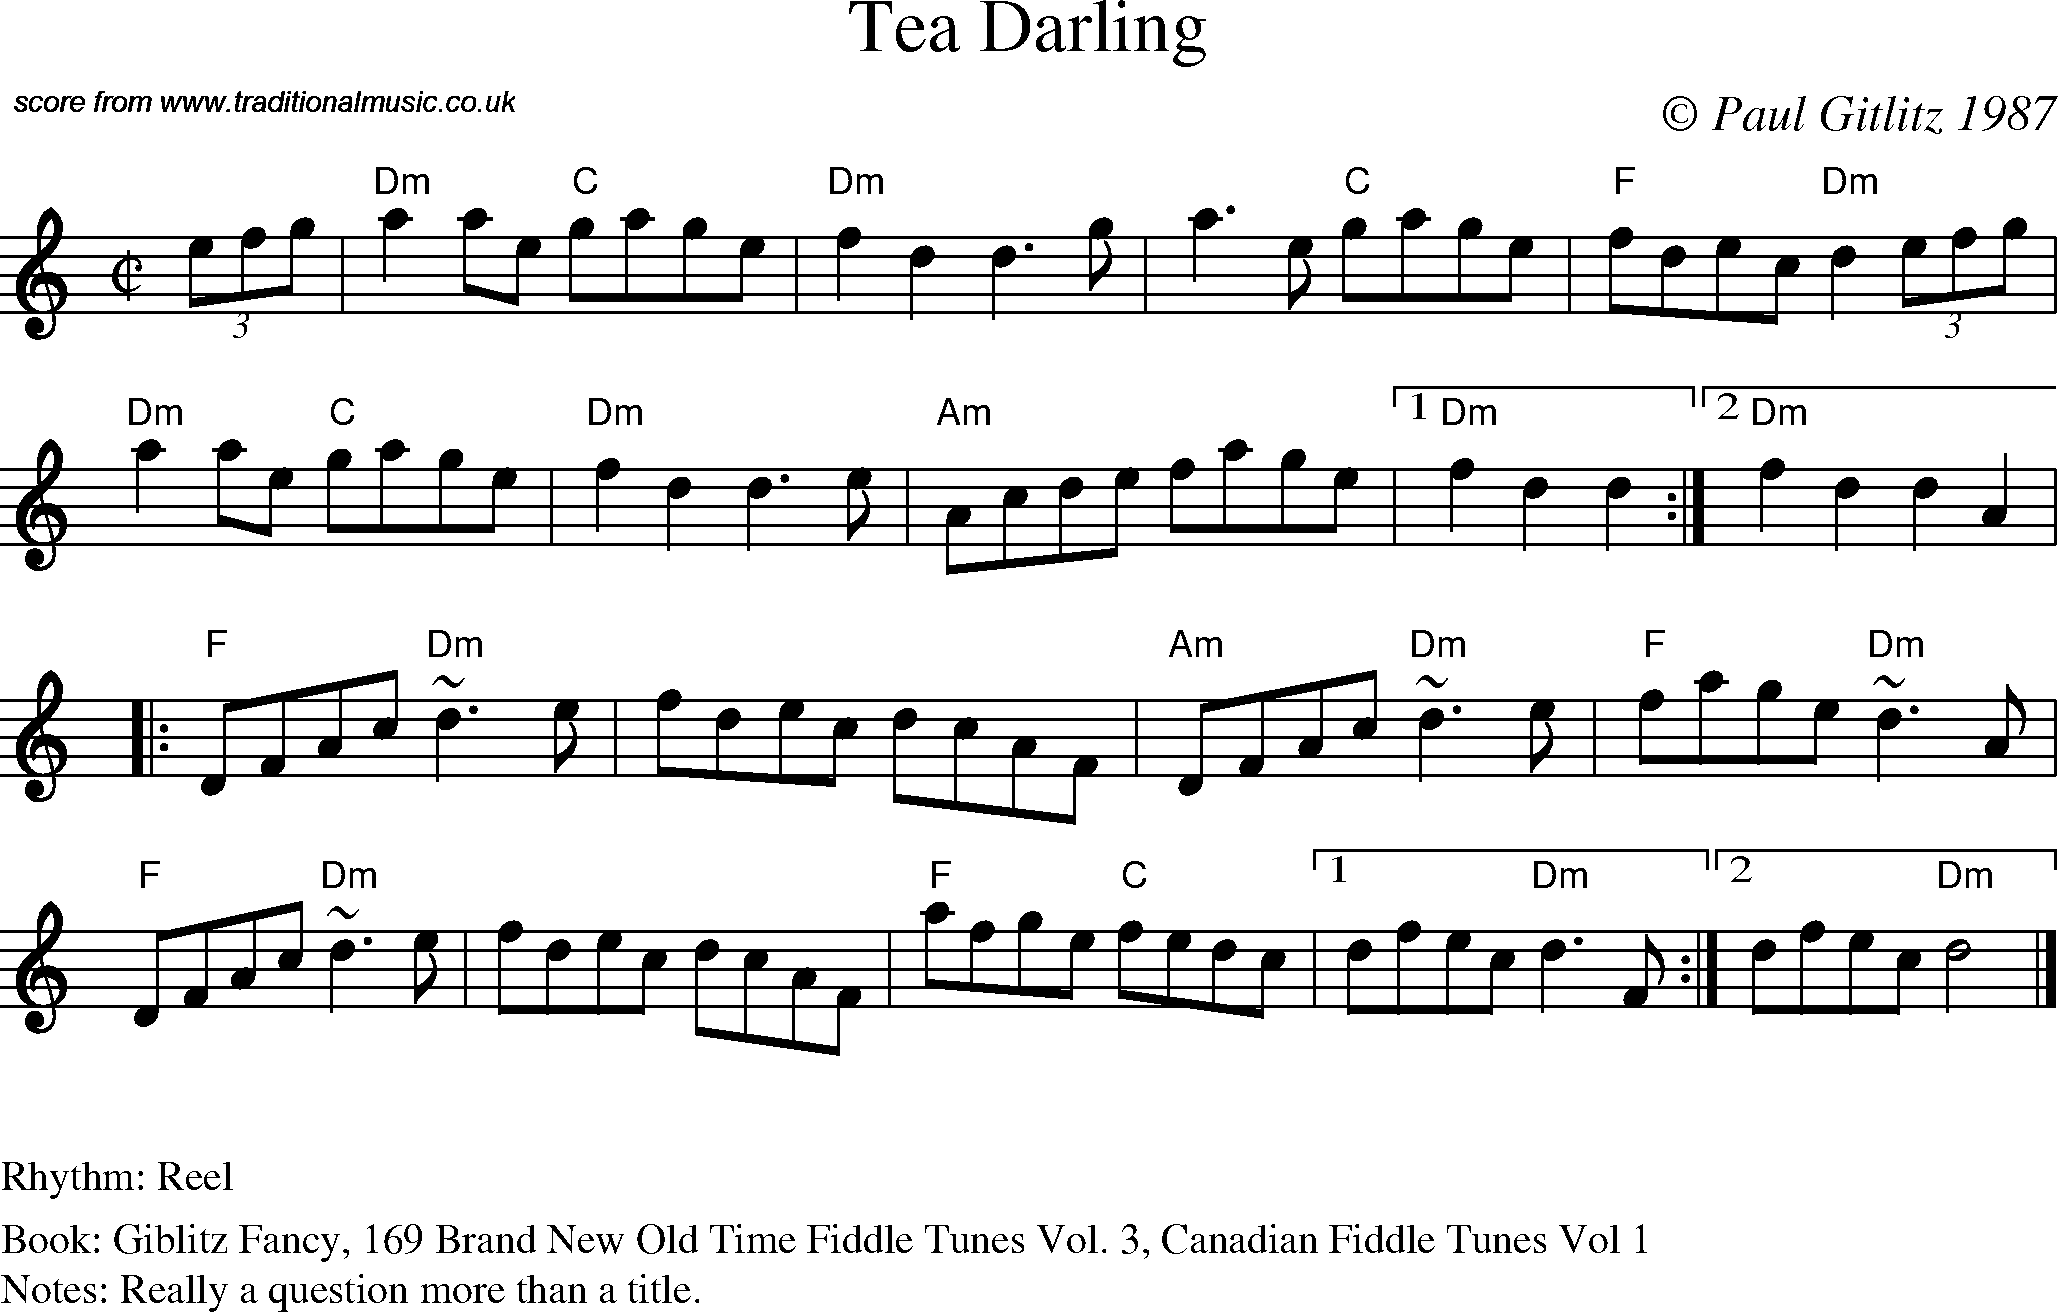 Sheet Music Score for Reel - Tea Darling